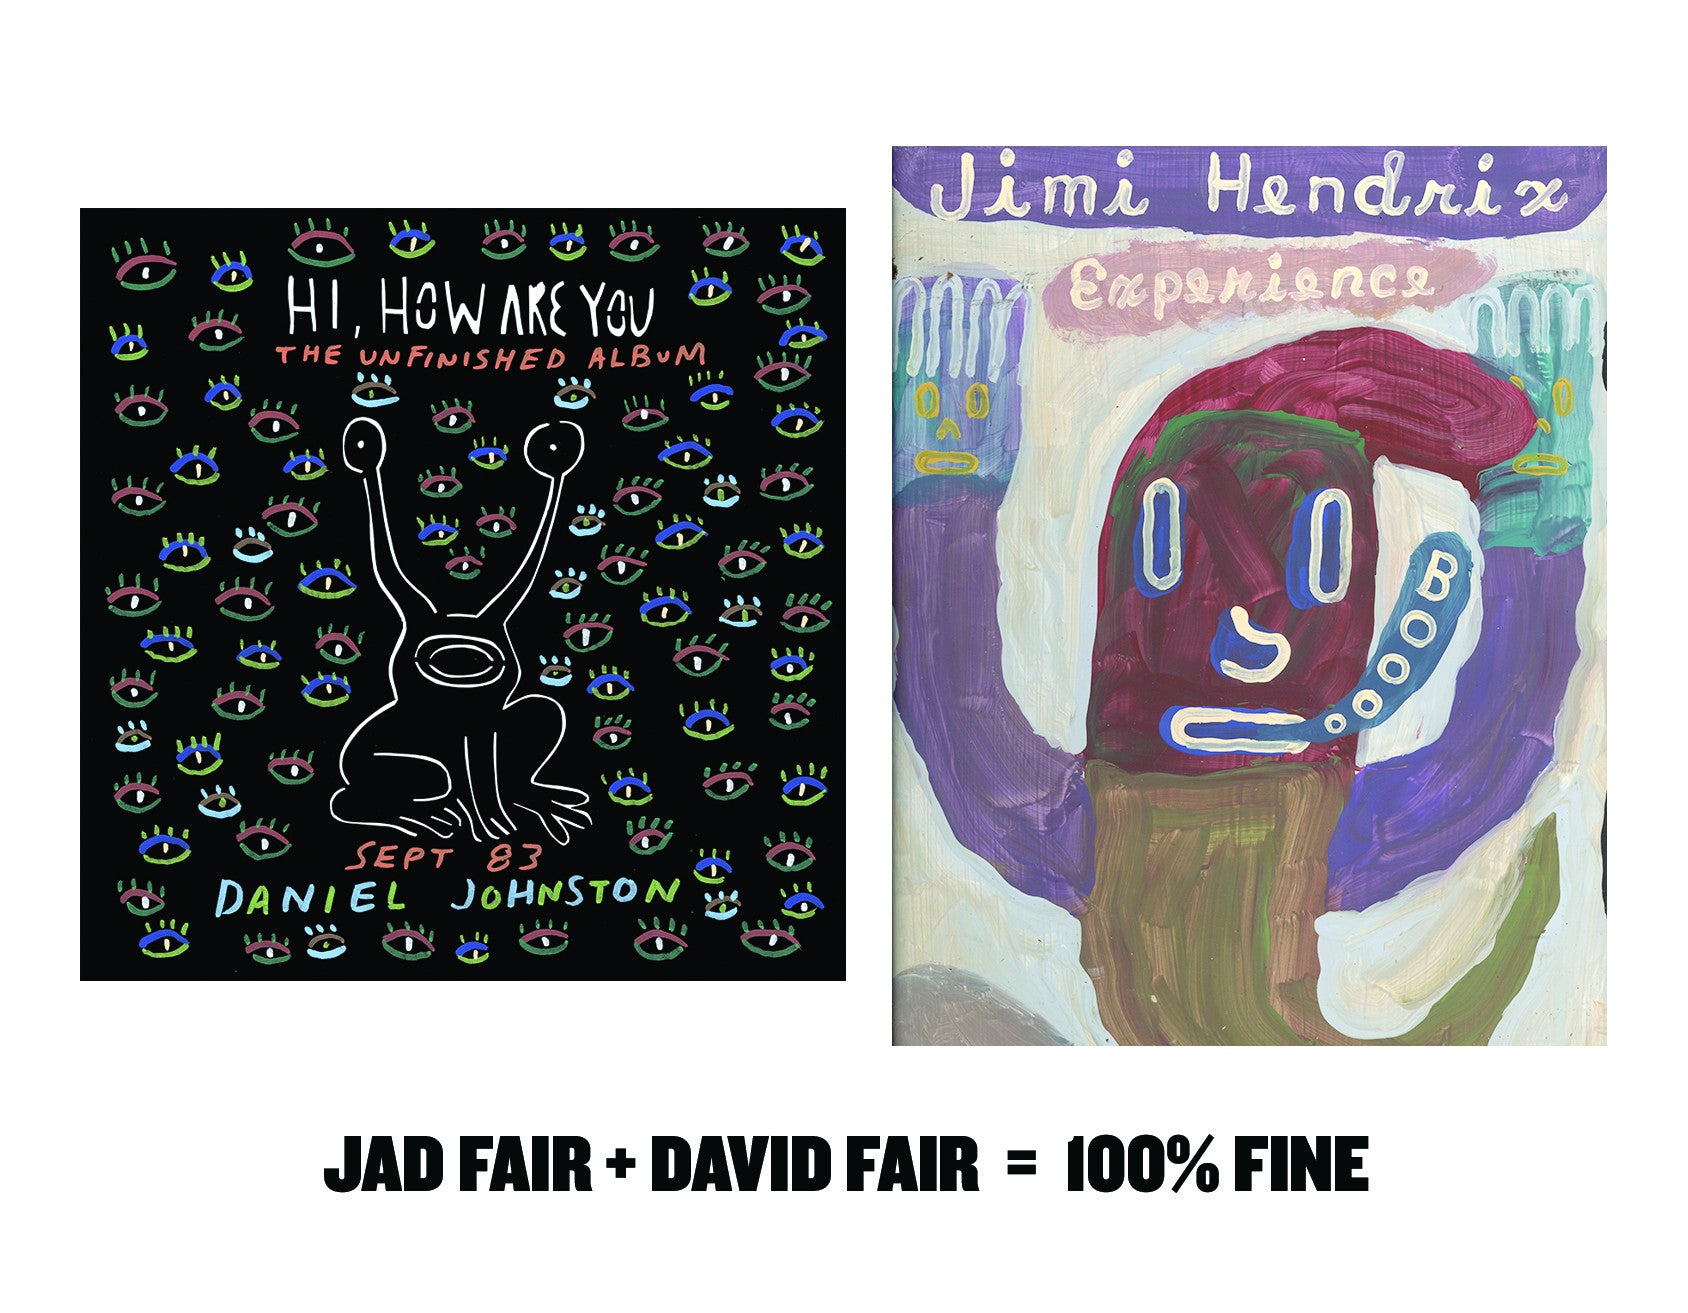 Jad Fair + David Fair = 100% Fine!